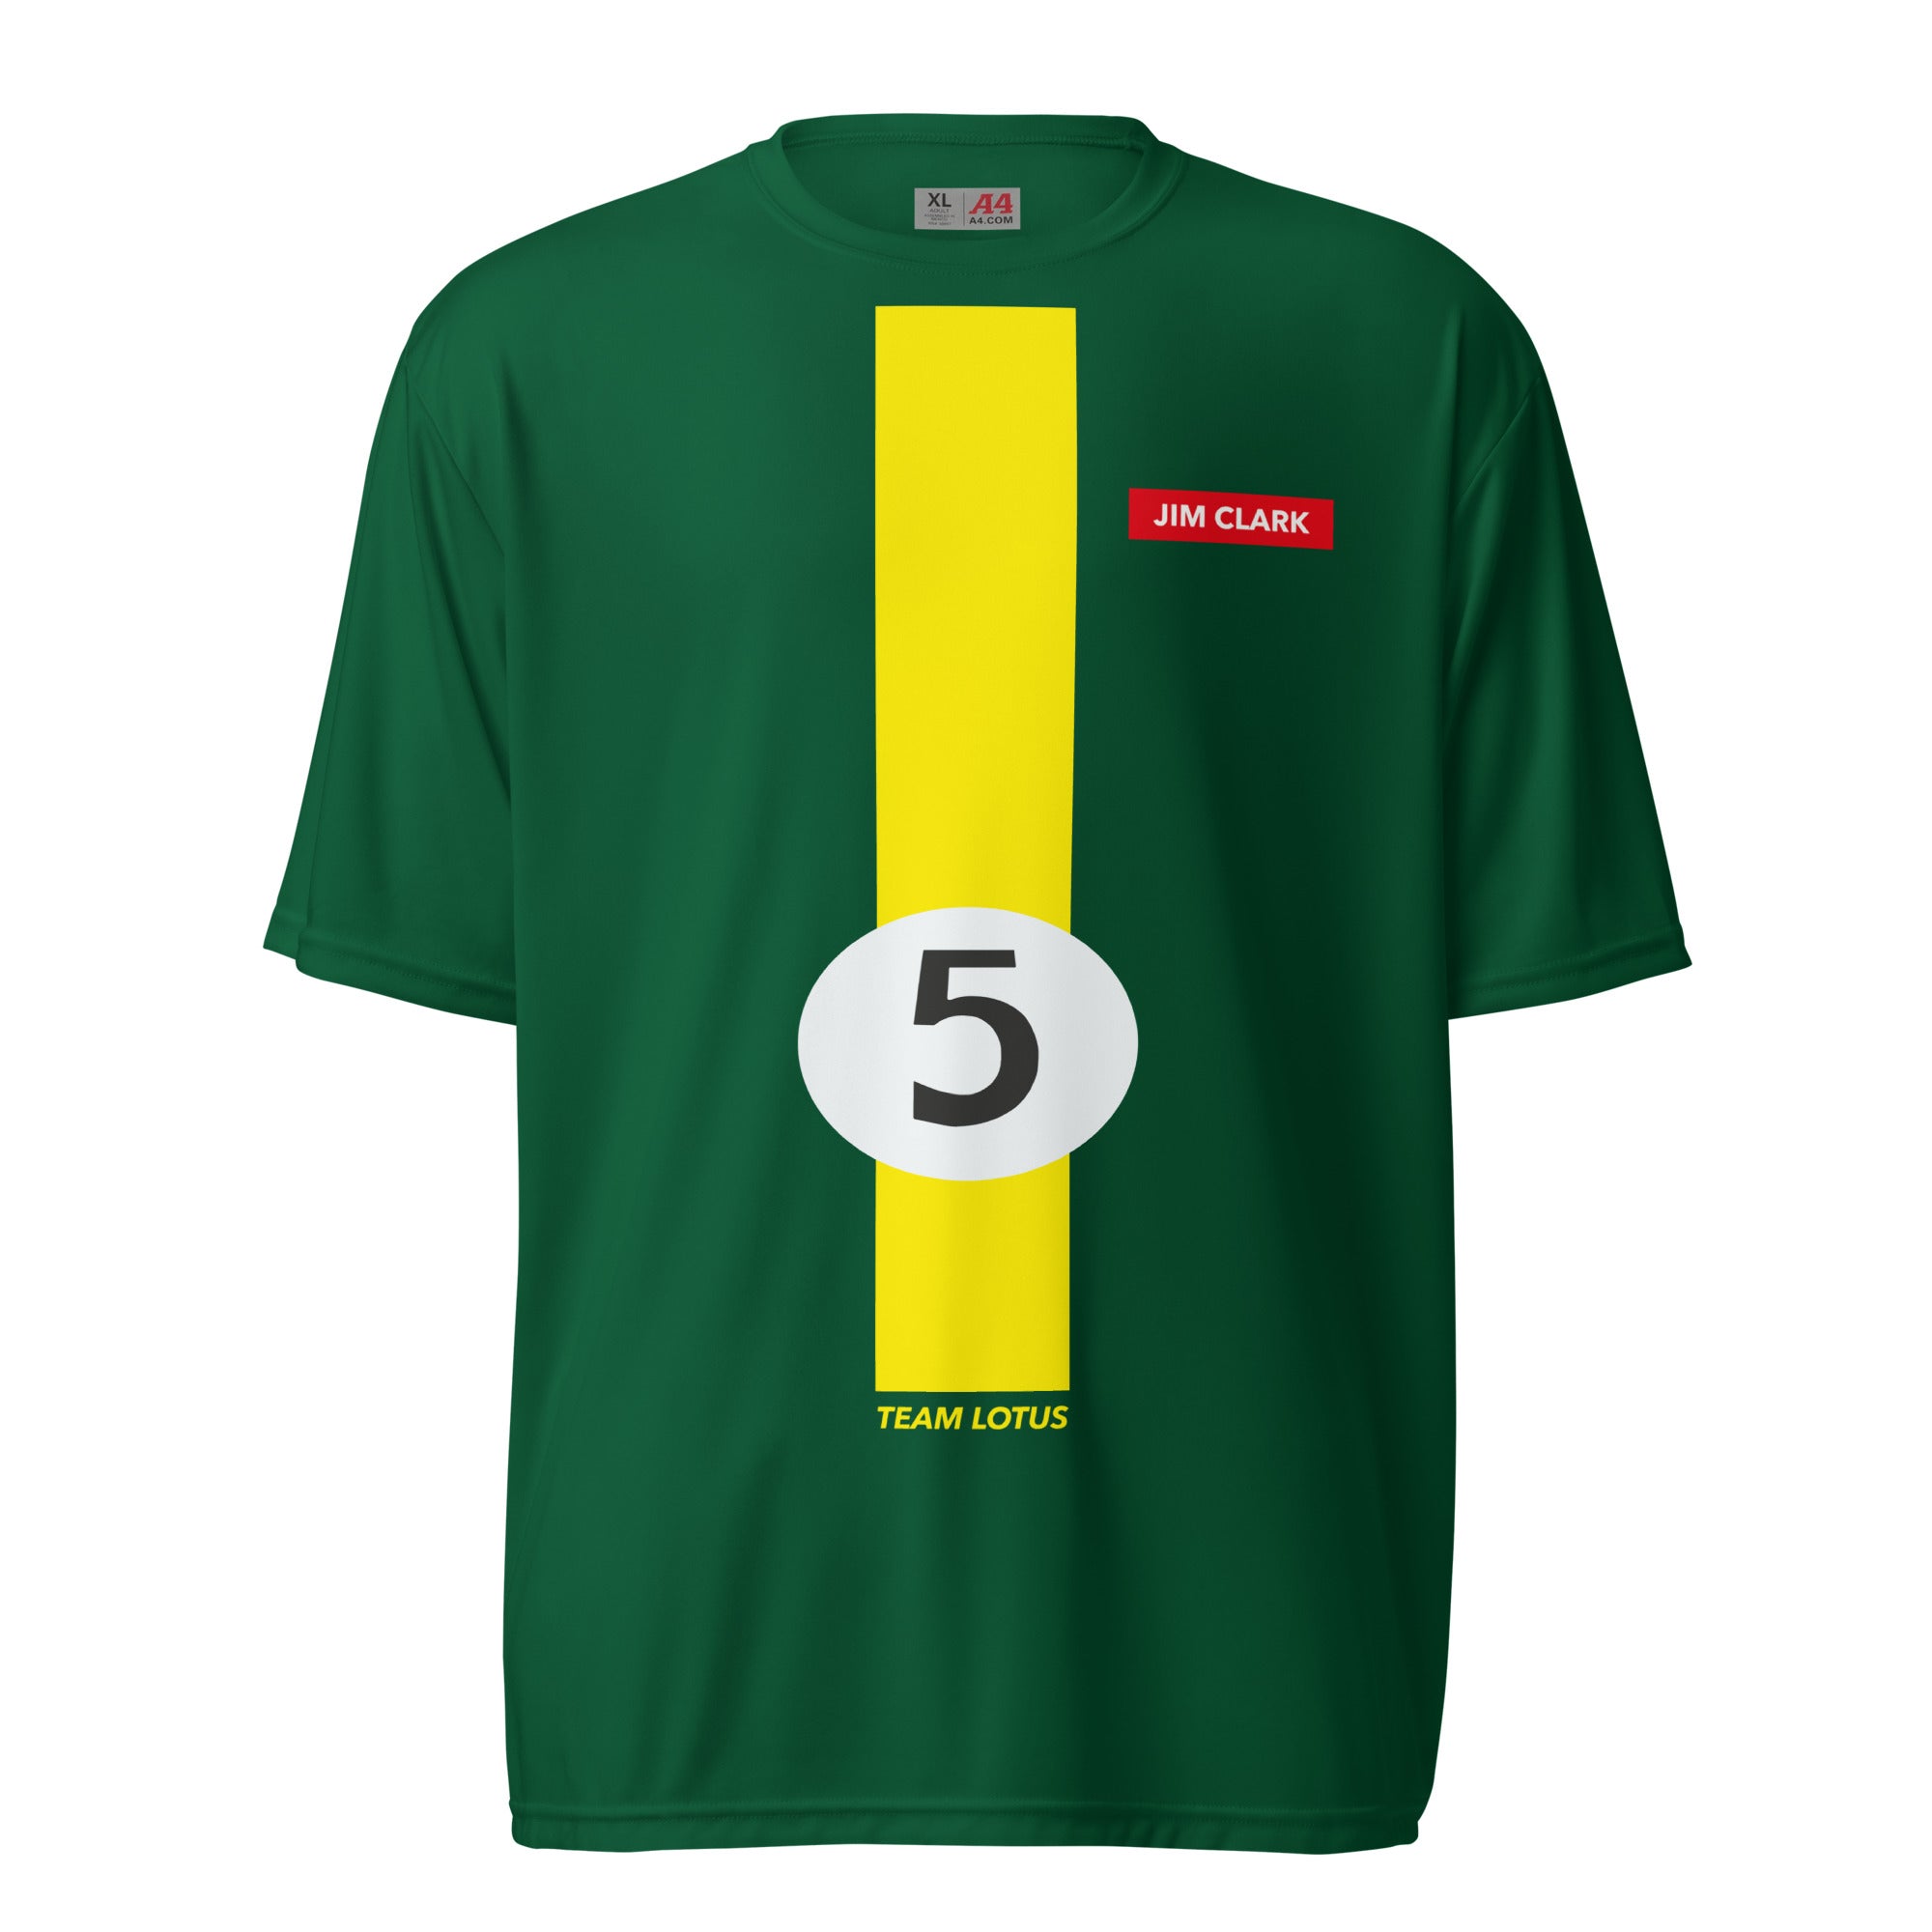 5: Jim Clark Team Lotus F1 Unisex Sports T-Shirt Forest Green Yellow stripe front flat